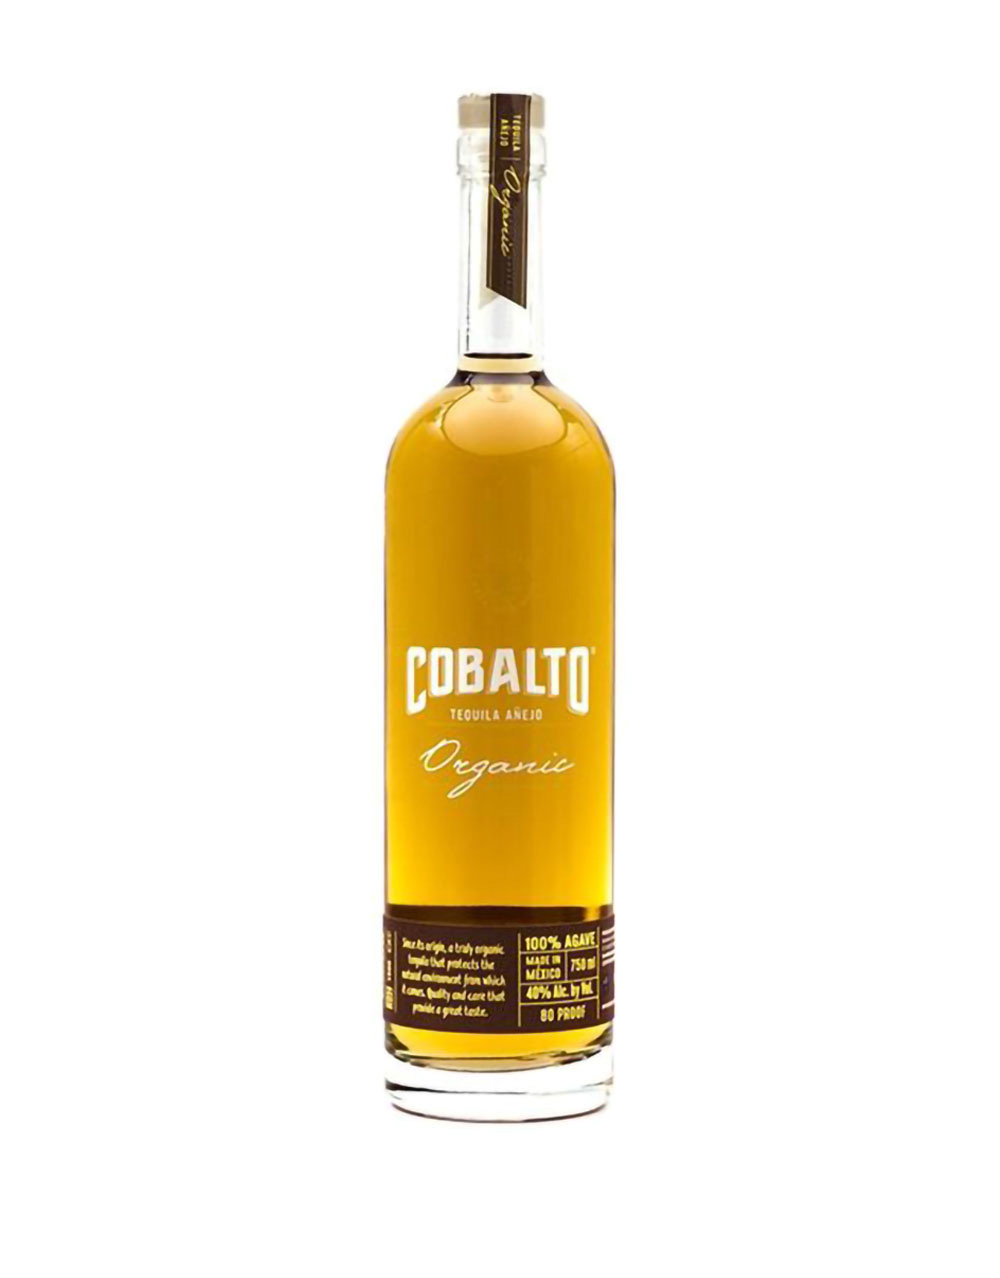 Cobalto Organic Anejo Tequila